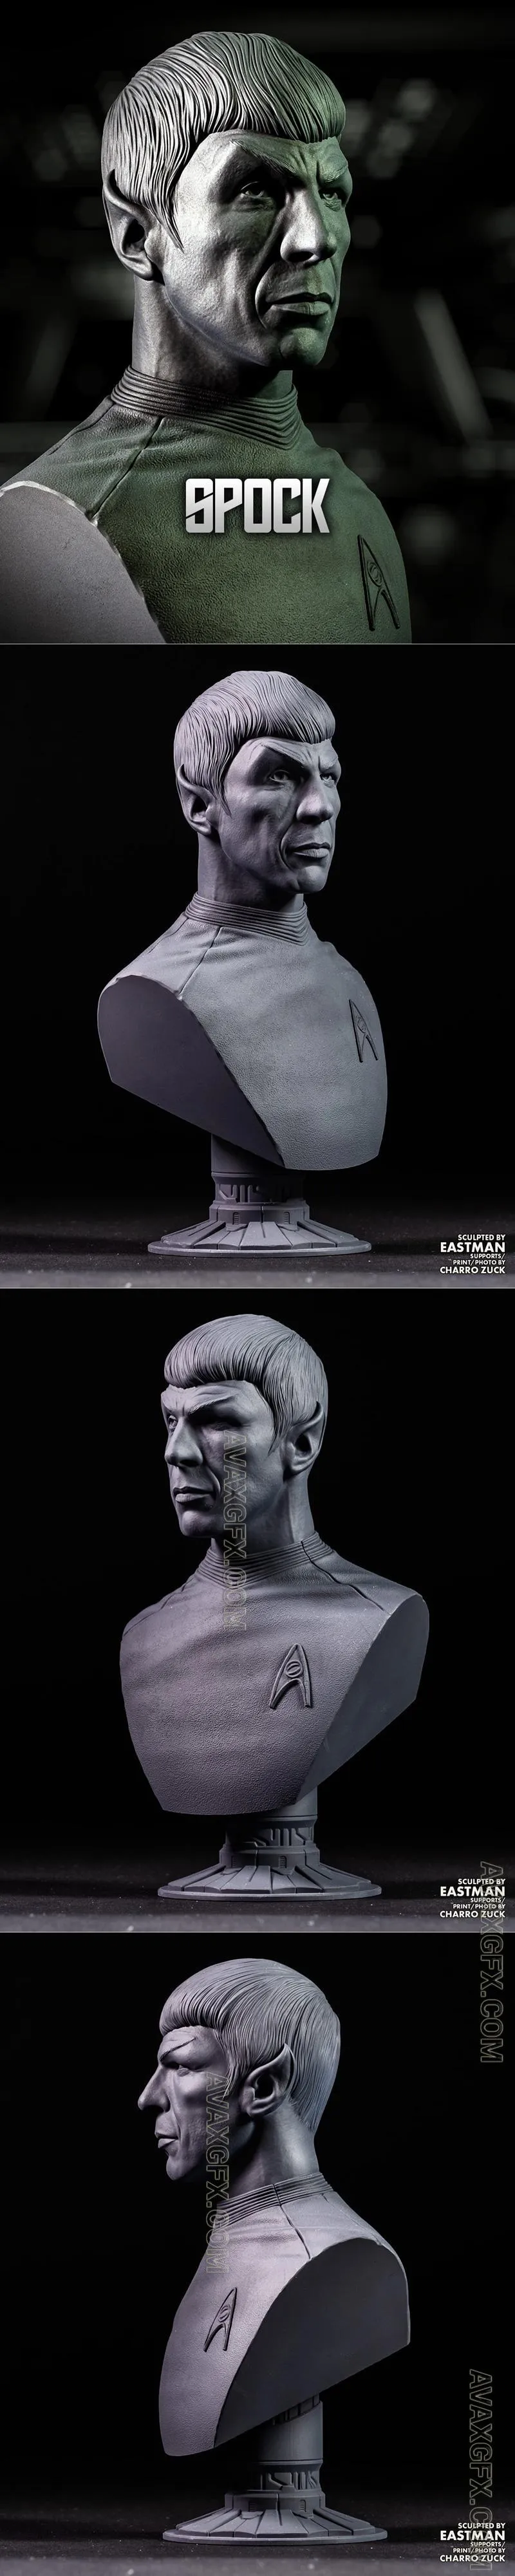 Spock Bust - STL 3D Model